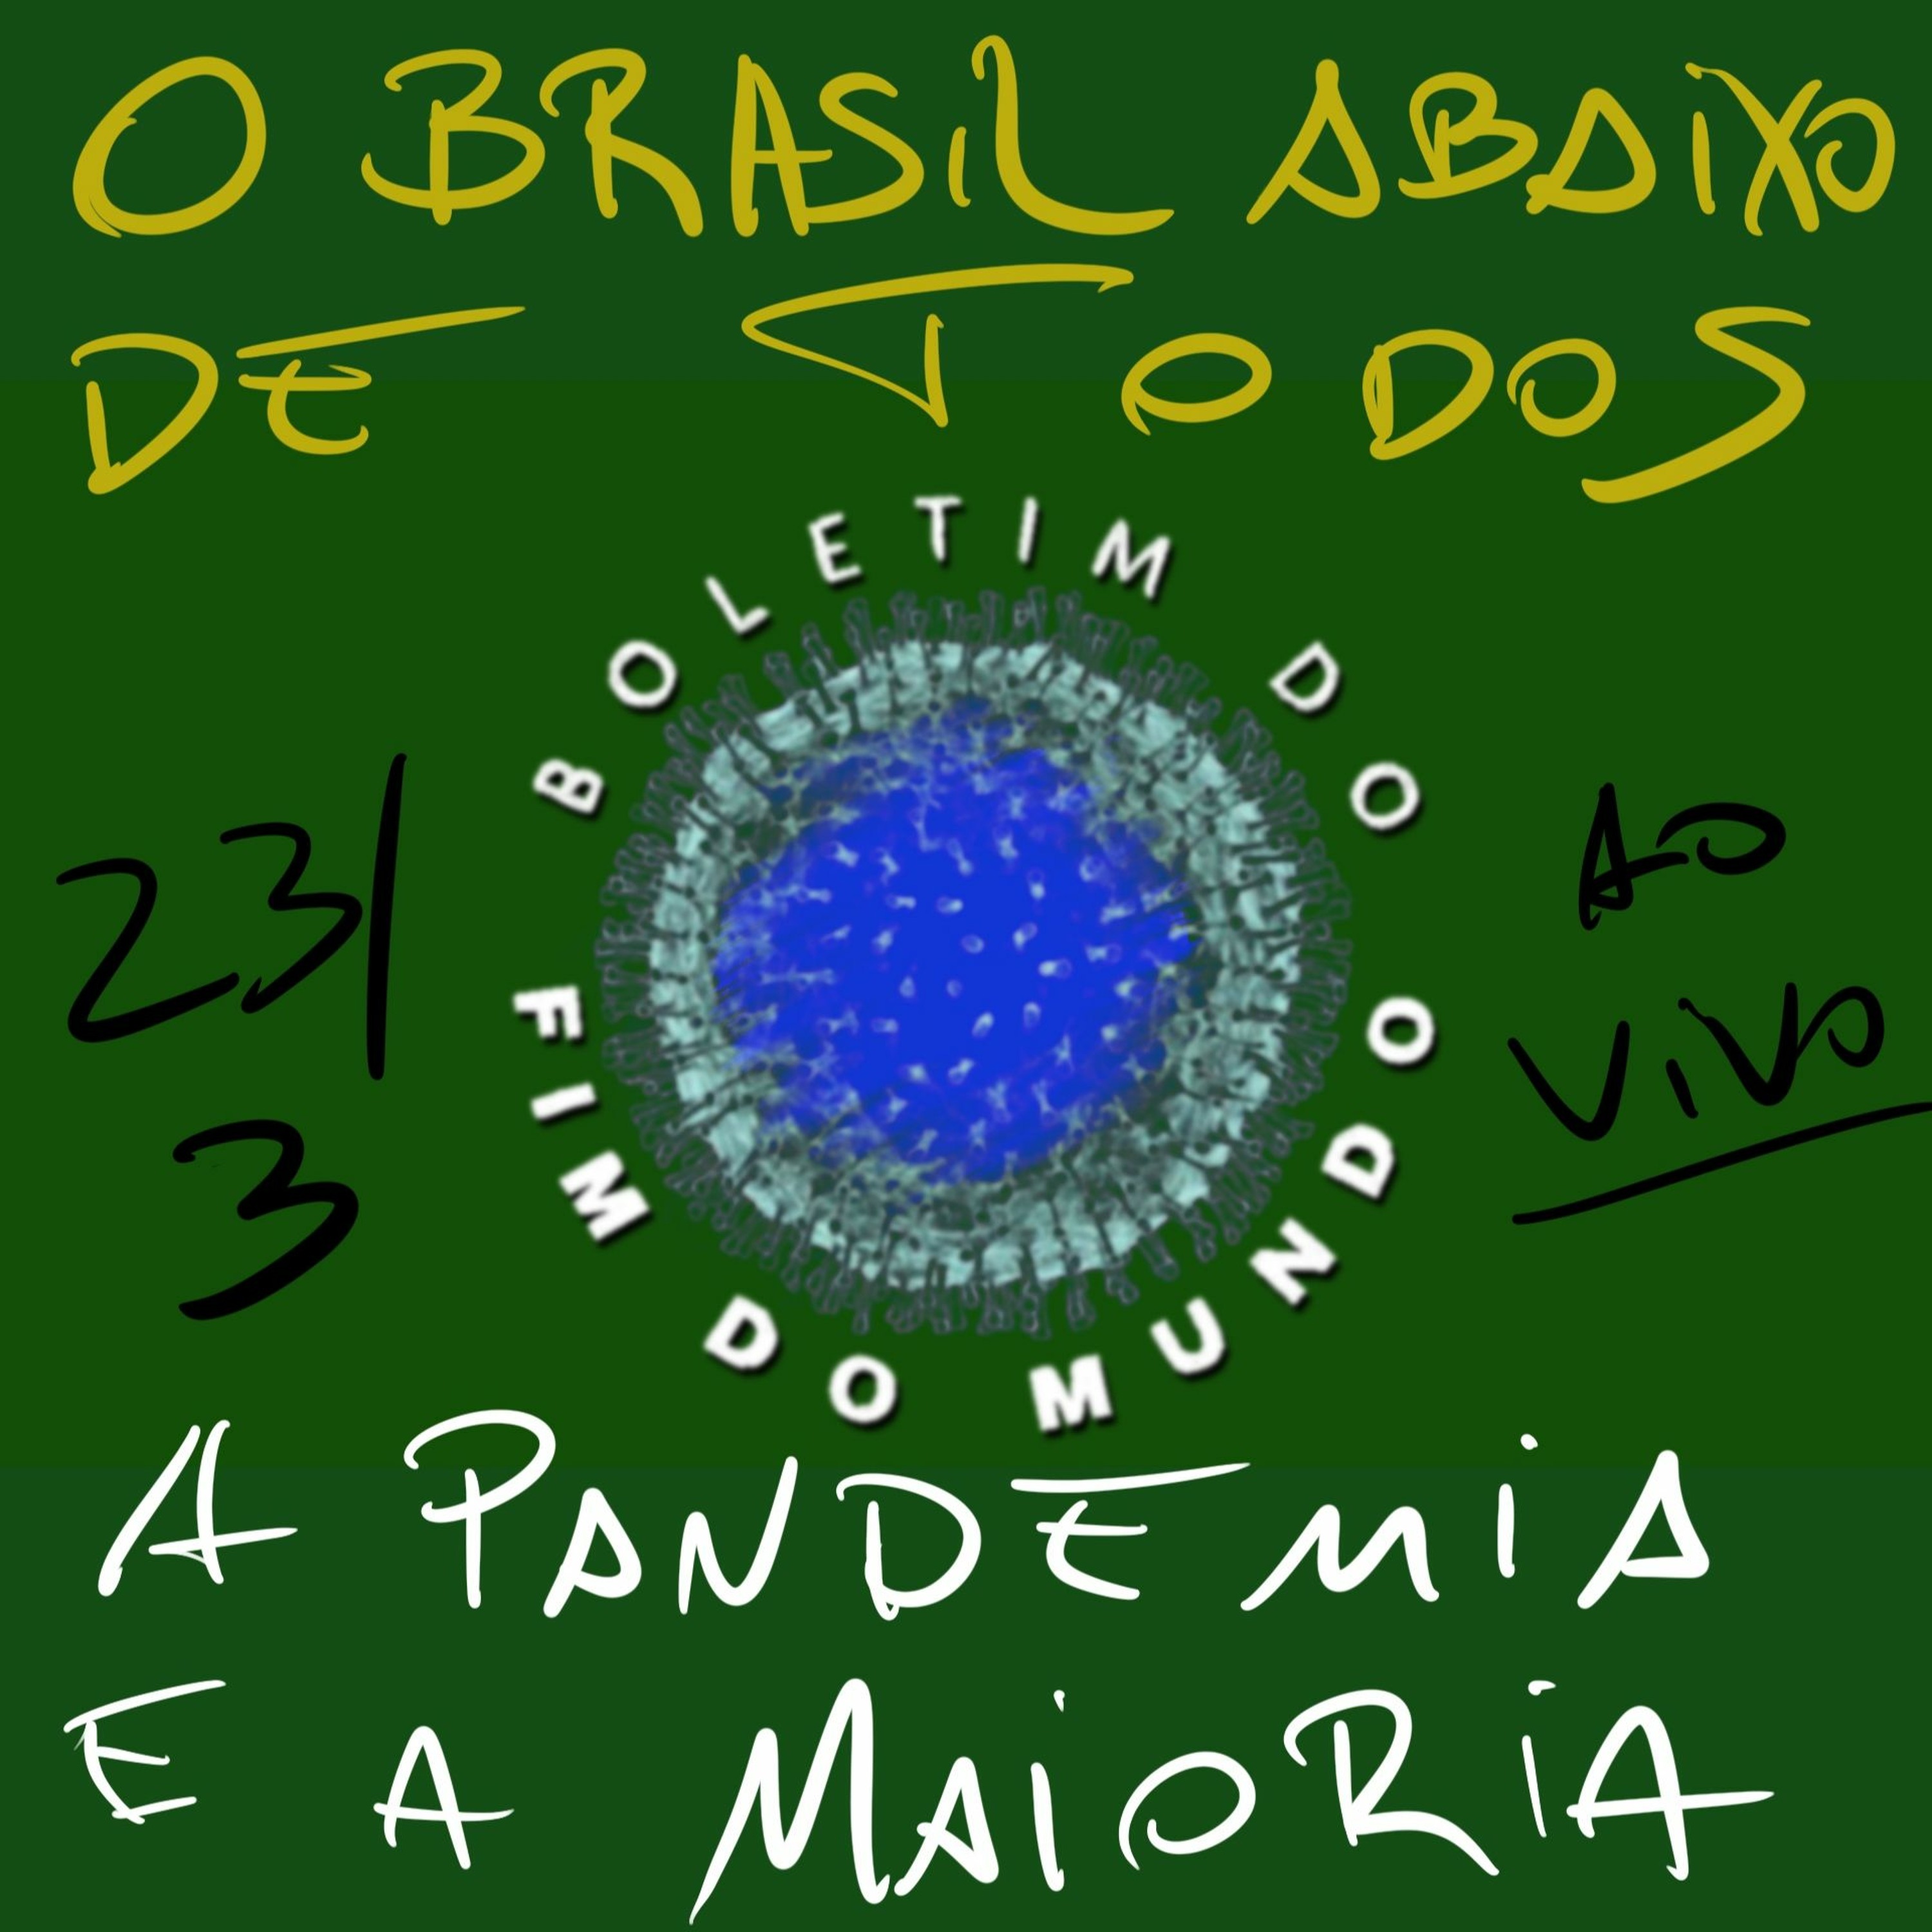 BFM - 23-3-20 - O Brasil Abaixo de Todos. A Pandemia e a Maioria